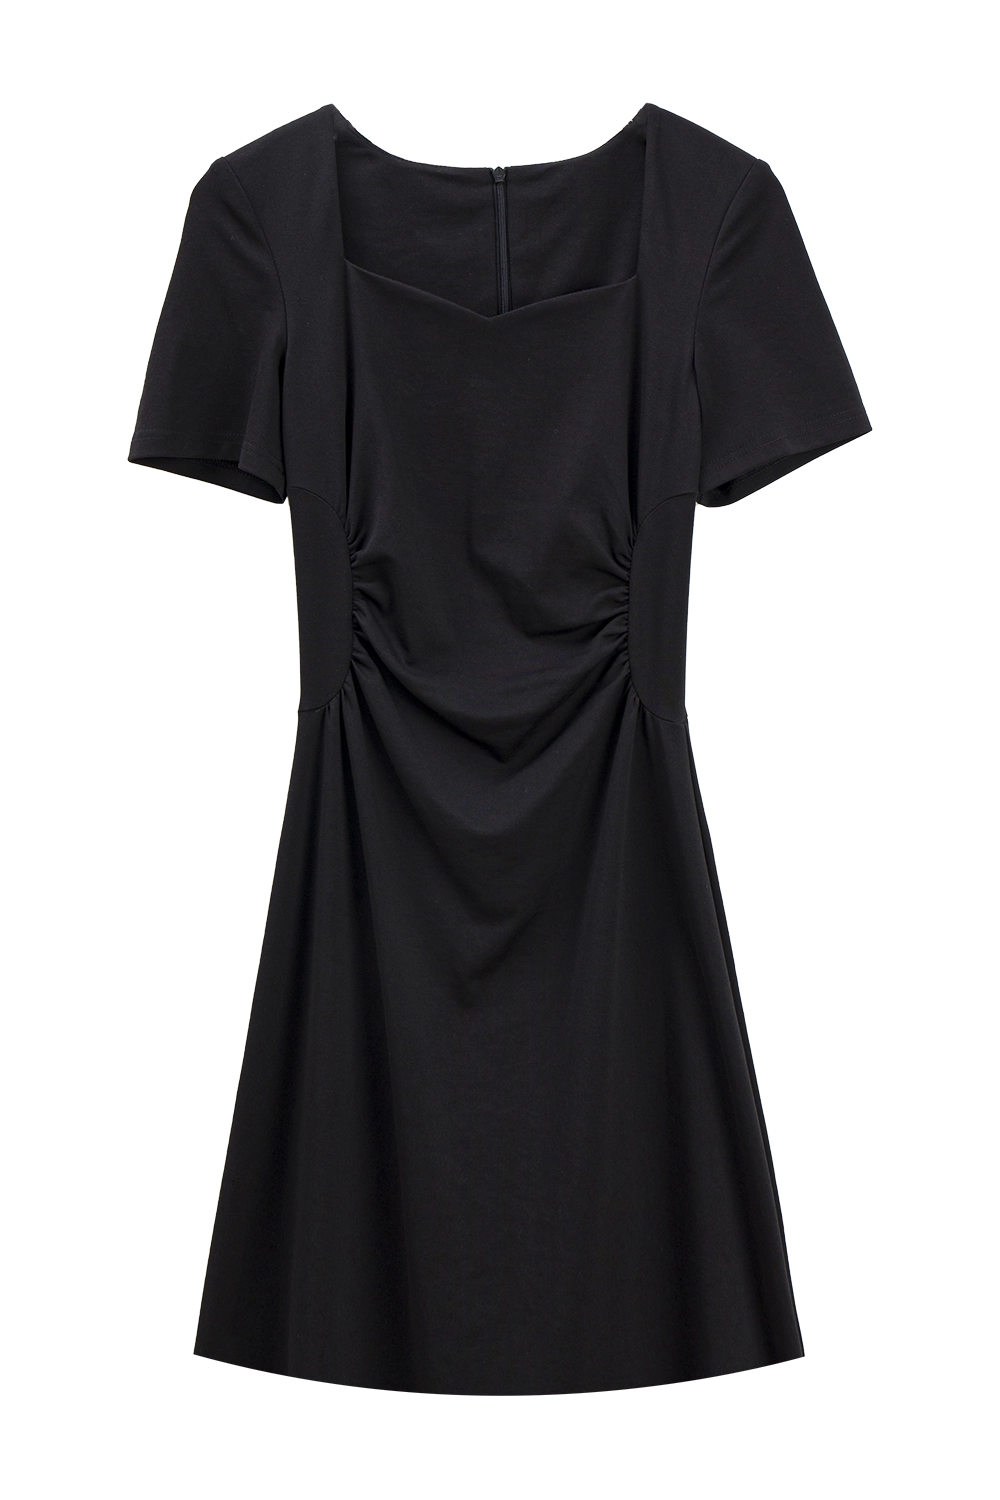 Women's Minimalist Short-Sleeve Dress